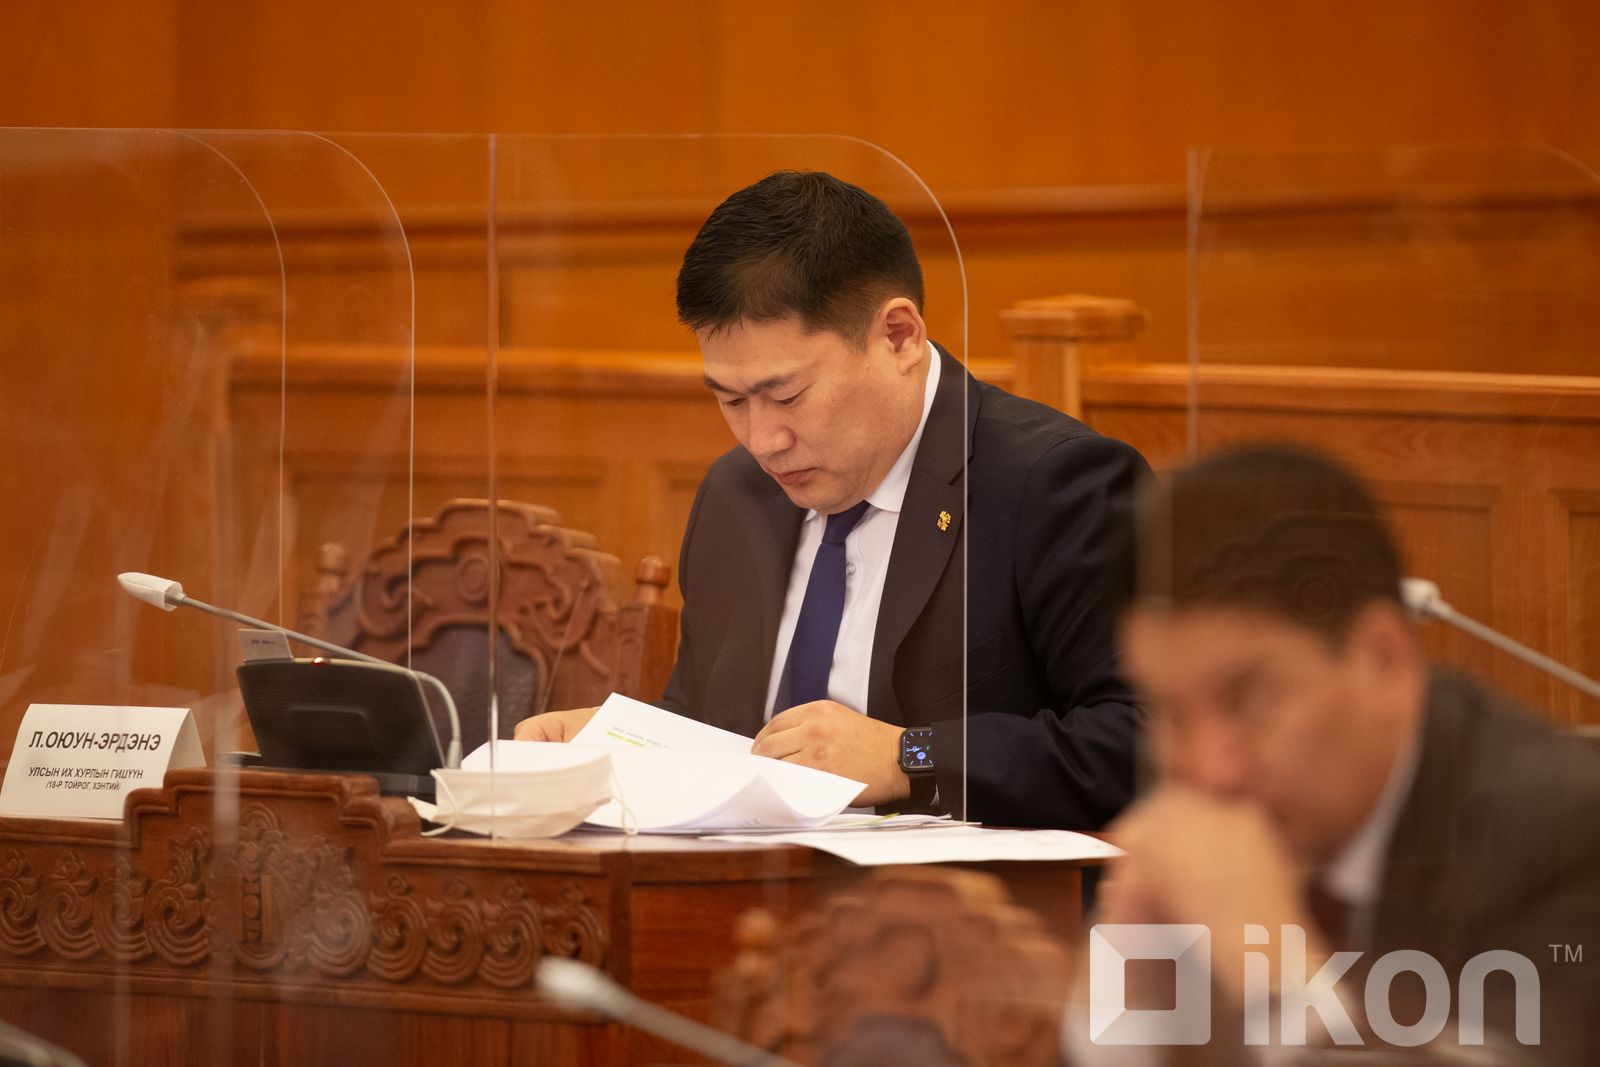 L.Oyun-Erdene 총리후보자, 전염병 이후 두 개의 부처를 신설할 것.jpg